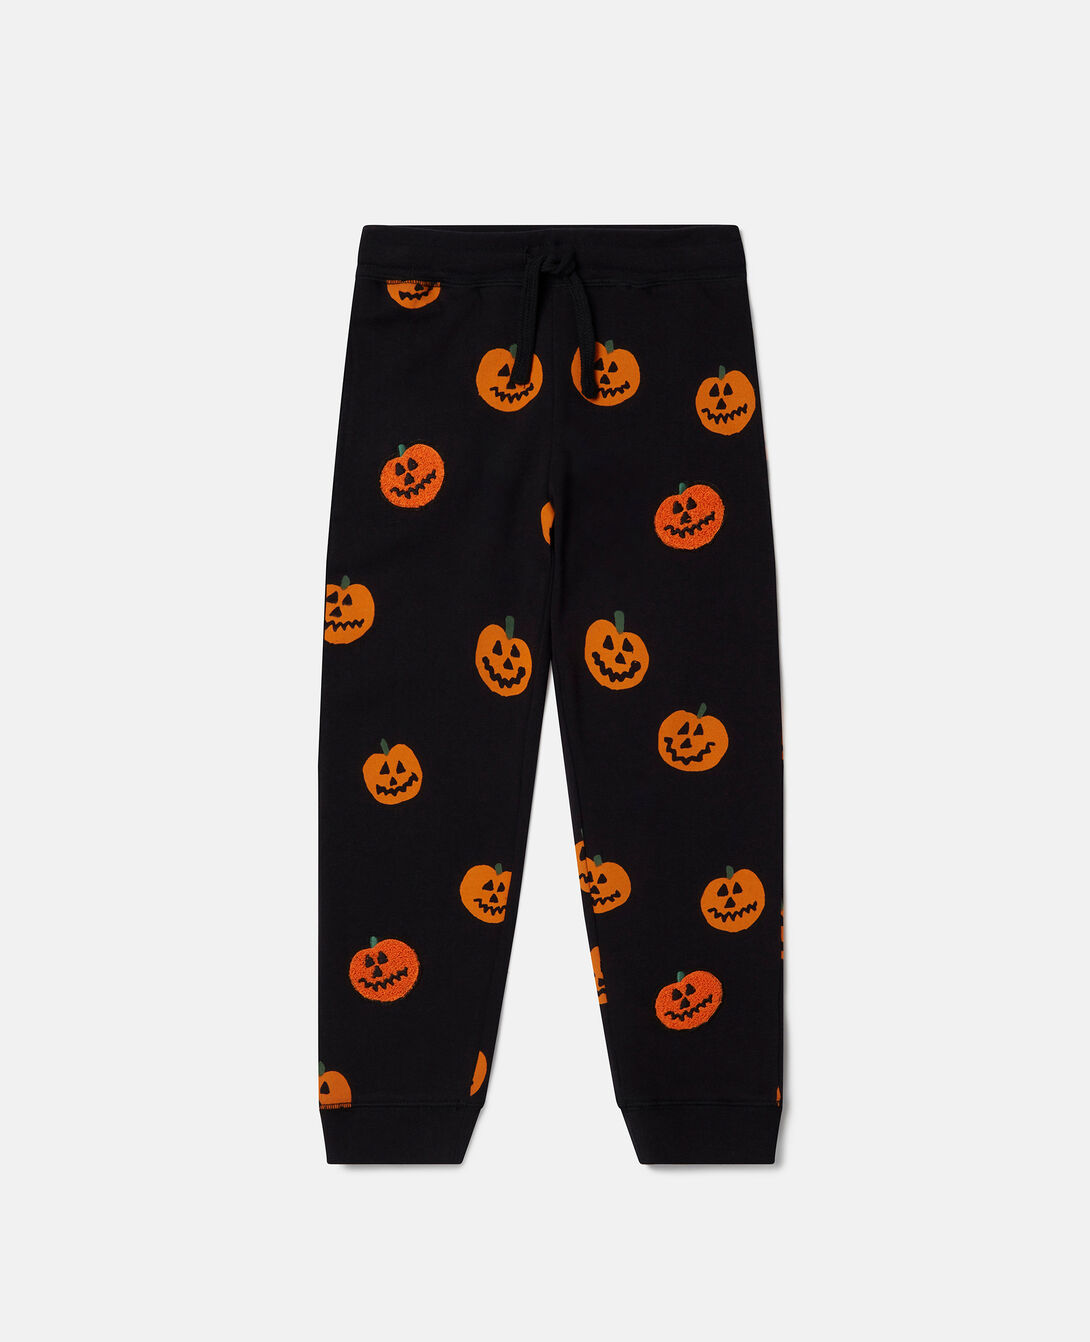 Orange Pumpkin Girls Fuzzy Pajama Pants Plus Size